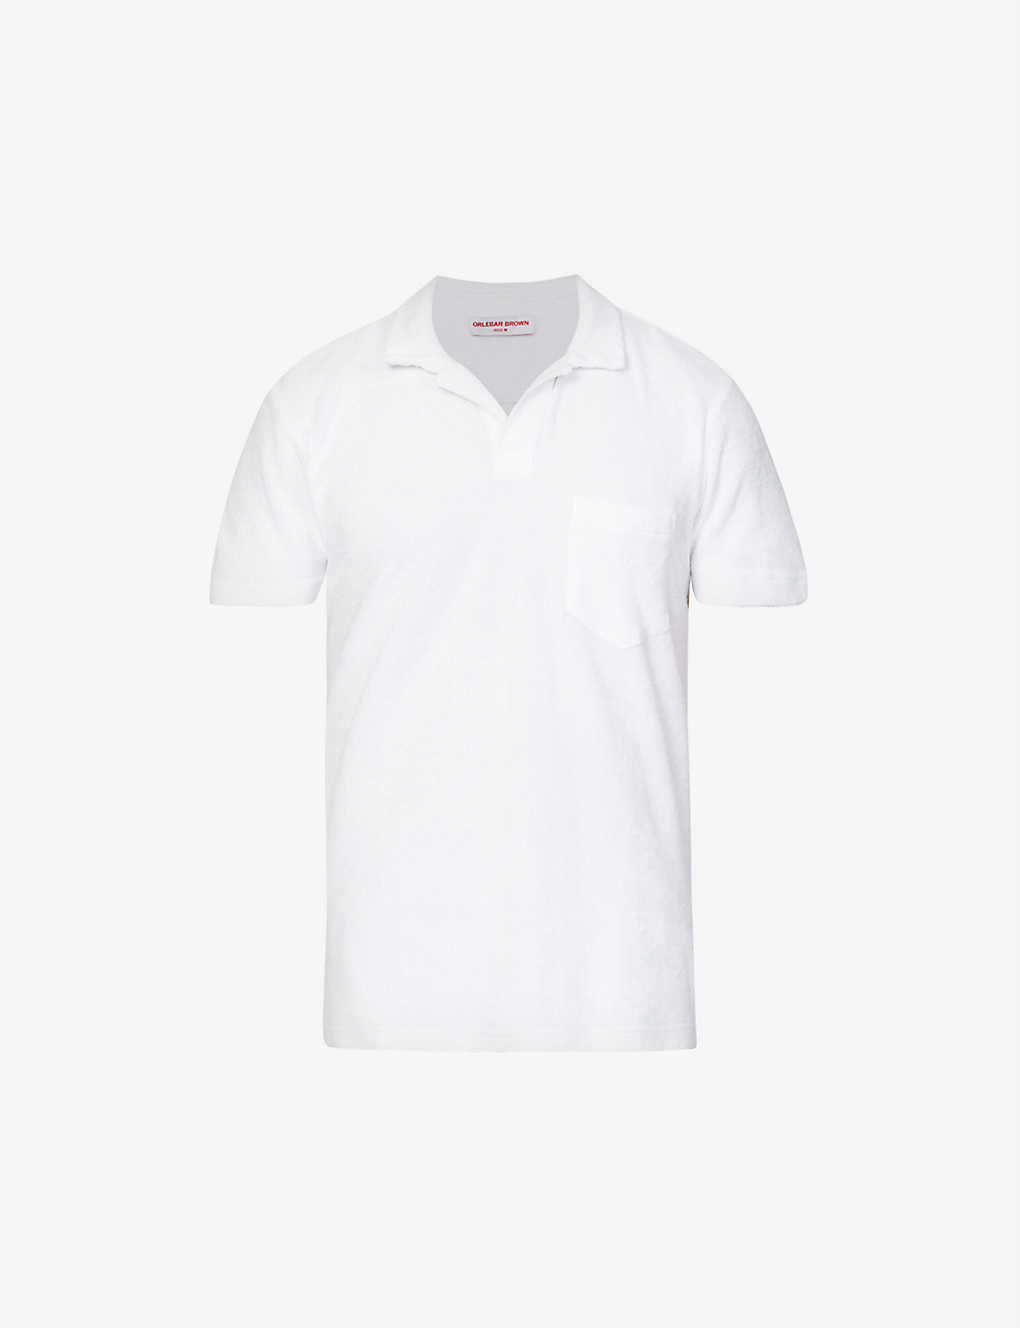 Shop Orlebar Brown Men's White Terry Towelling Cotton Polo Shirt